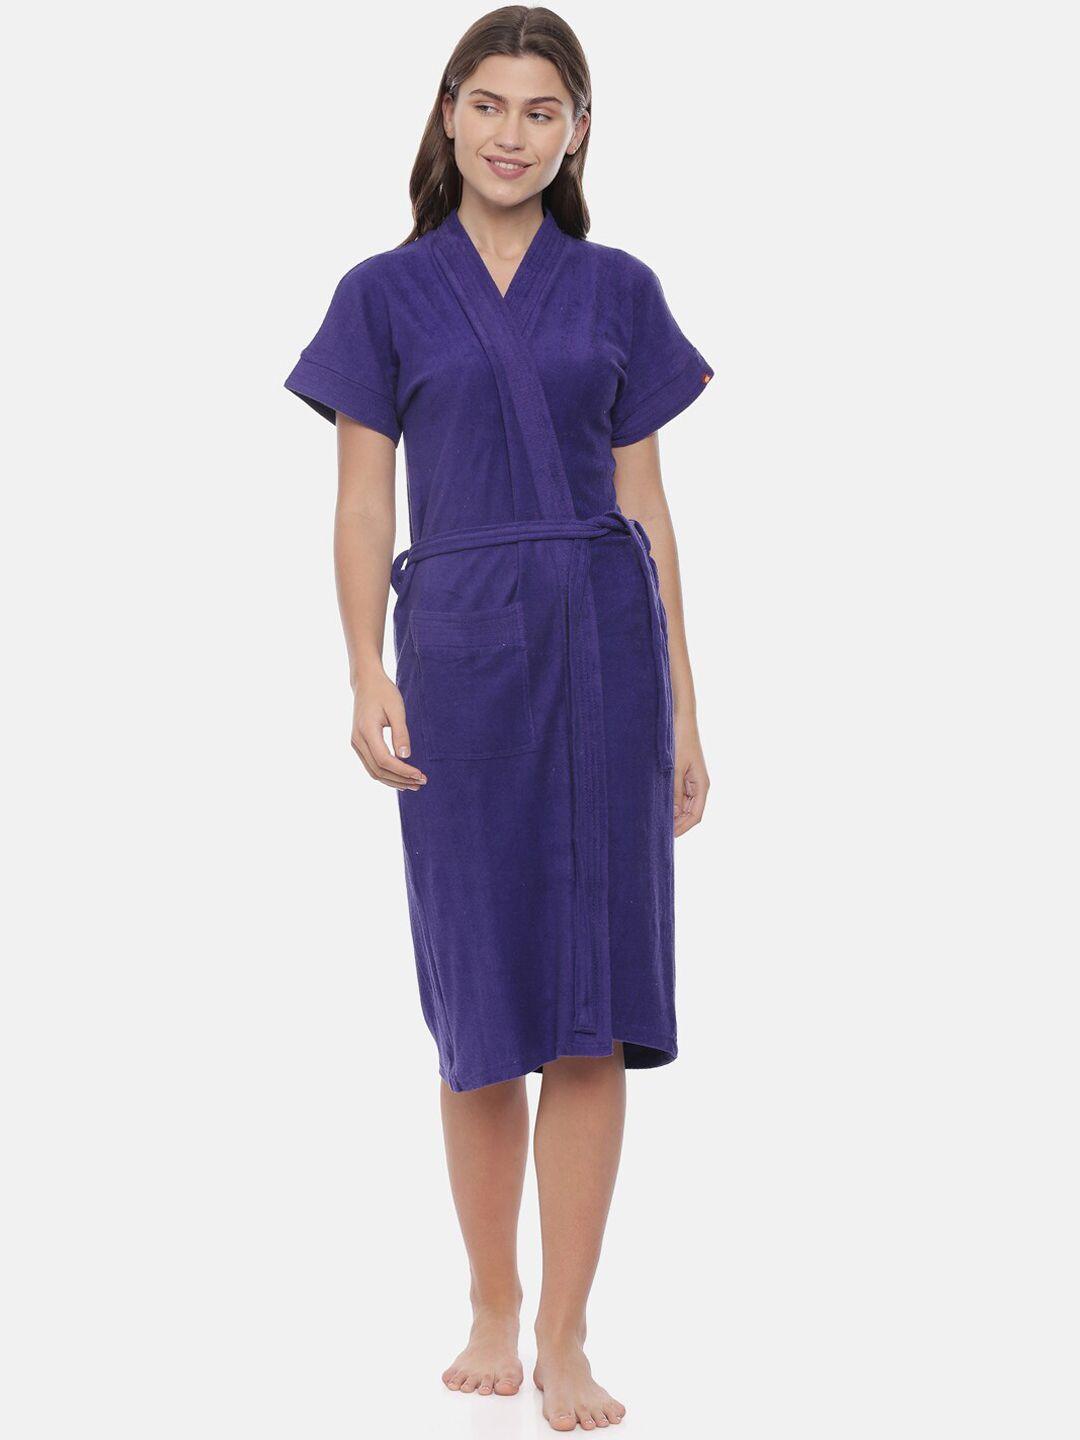 goldstroms-women-purple-solid-cotton-bath-robe